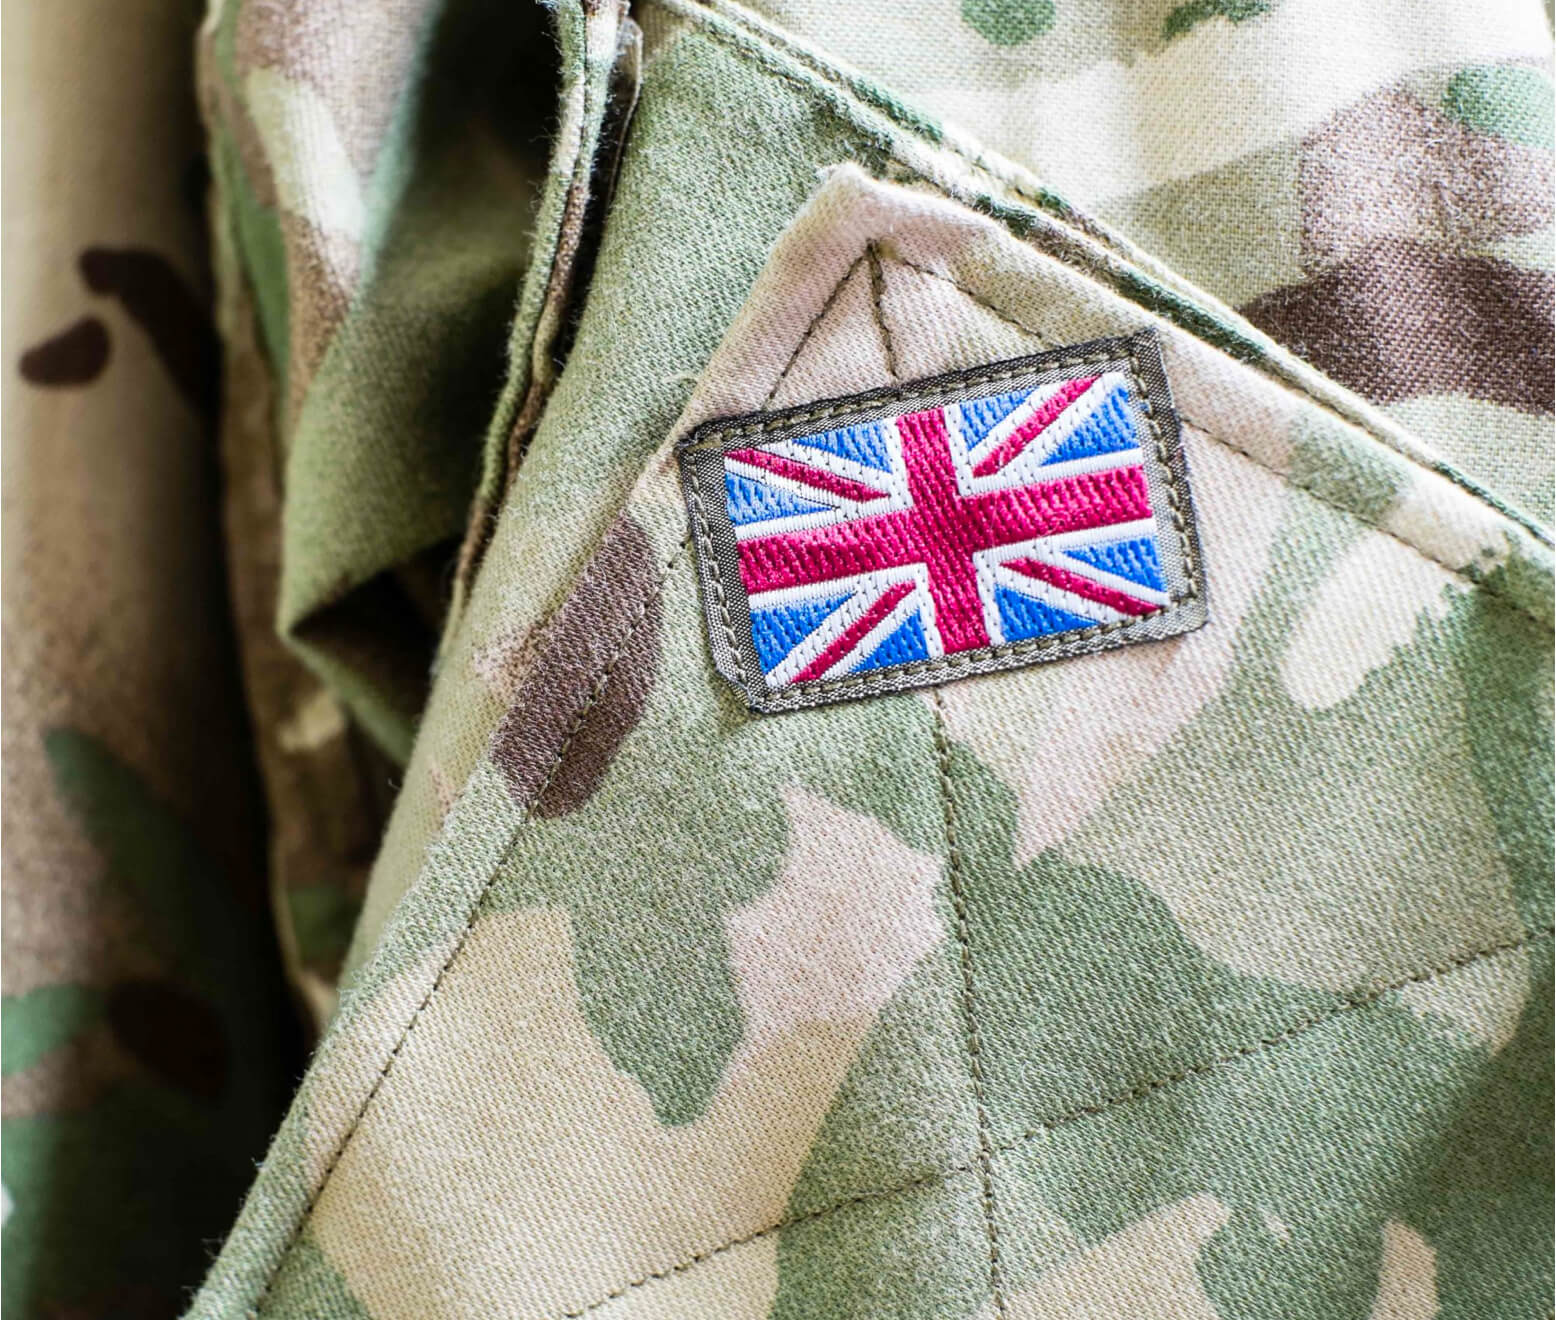 Career support for veterans in the UK